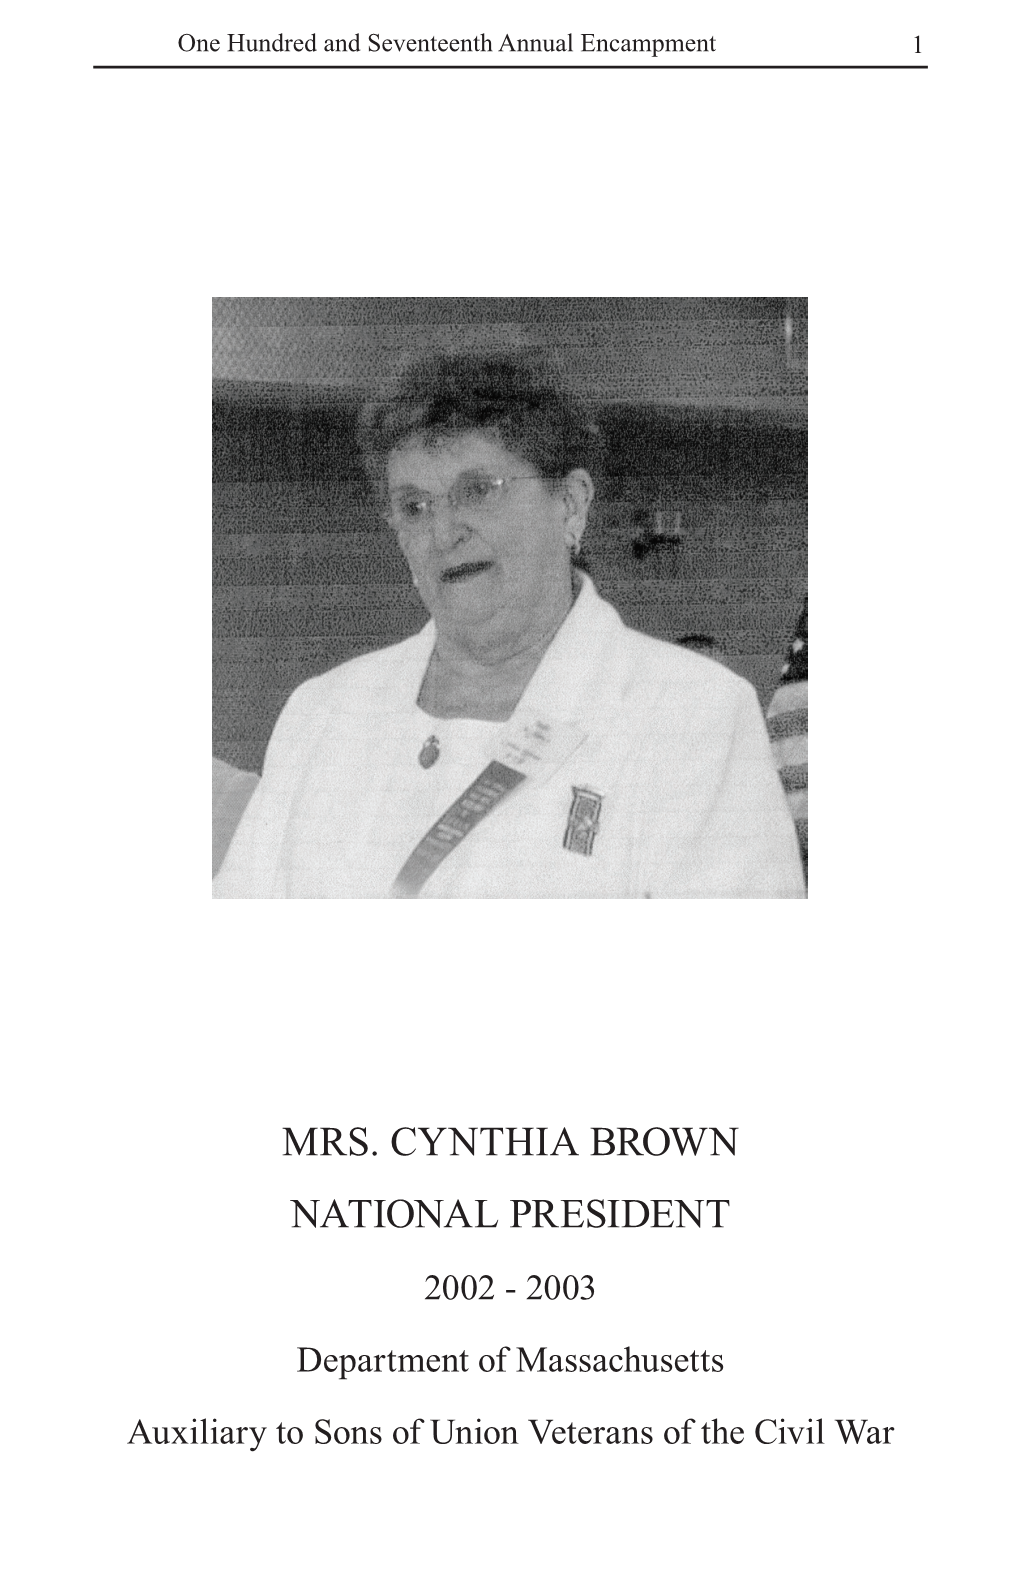 (2003), Fort Mitchell, Kentucky – NP Cynthia Brown